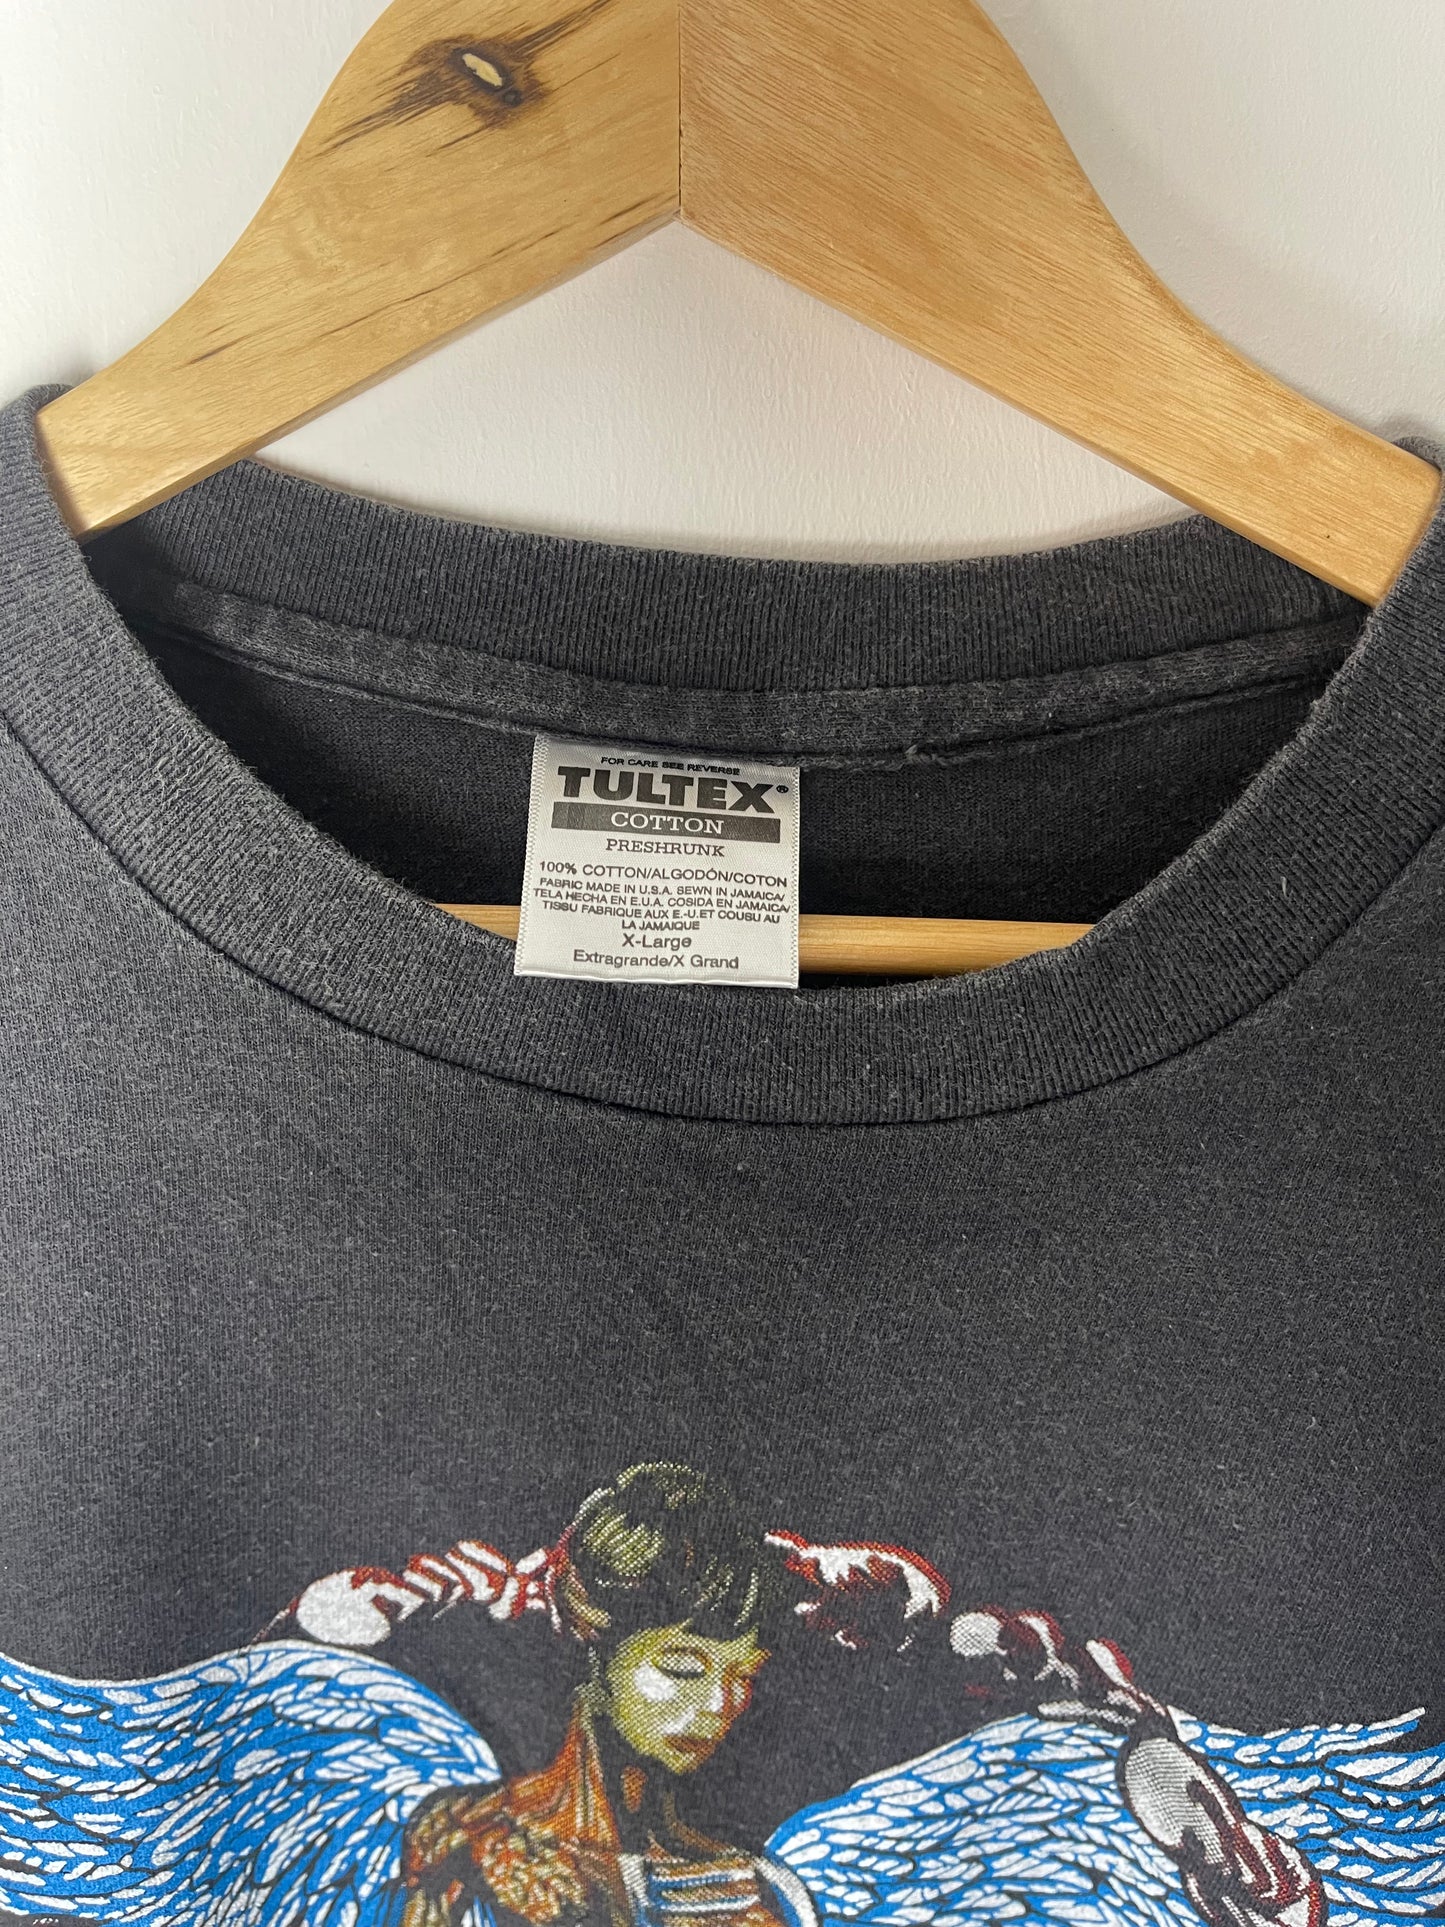 Vintage Style Nirvana Angel Graphic T-shirt - X Large